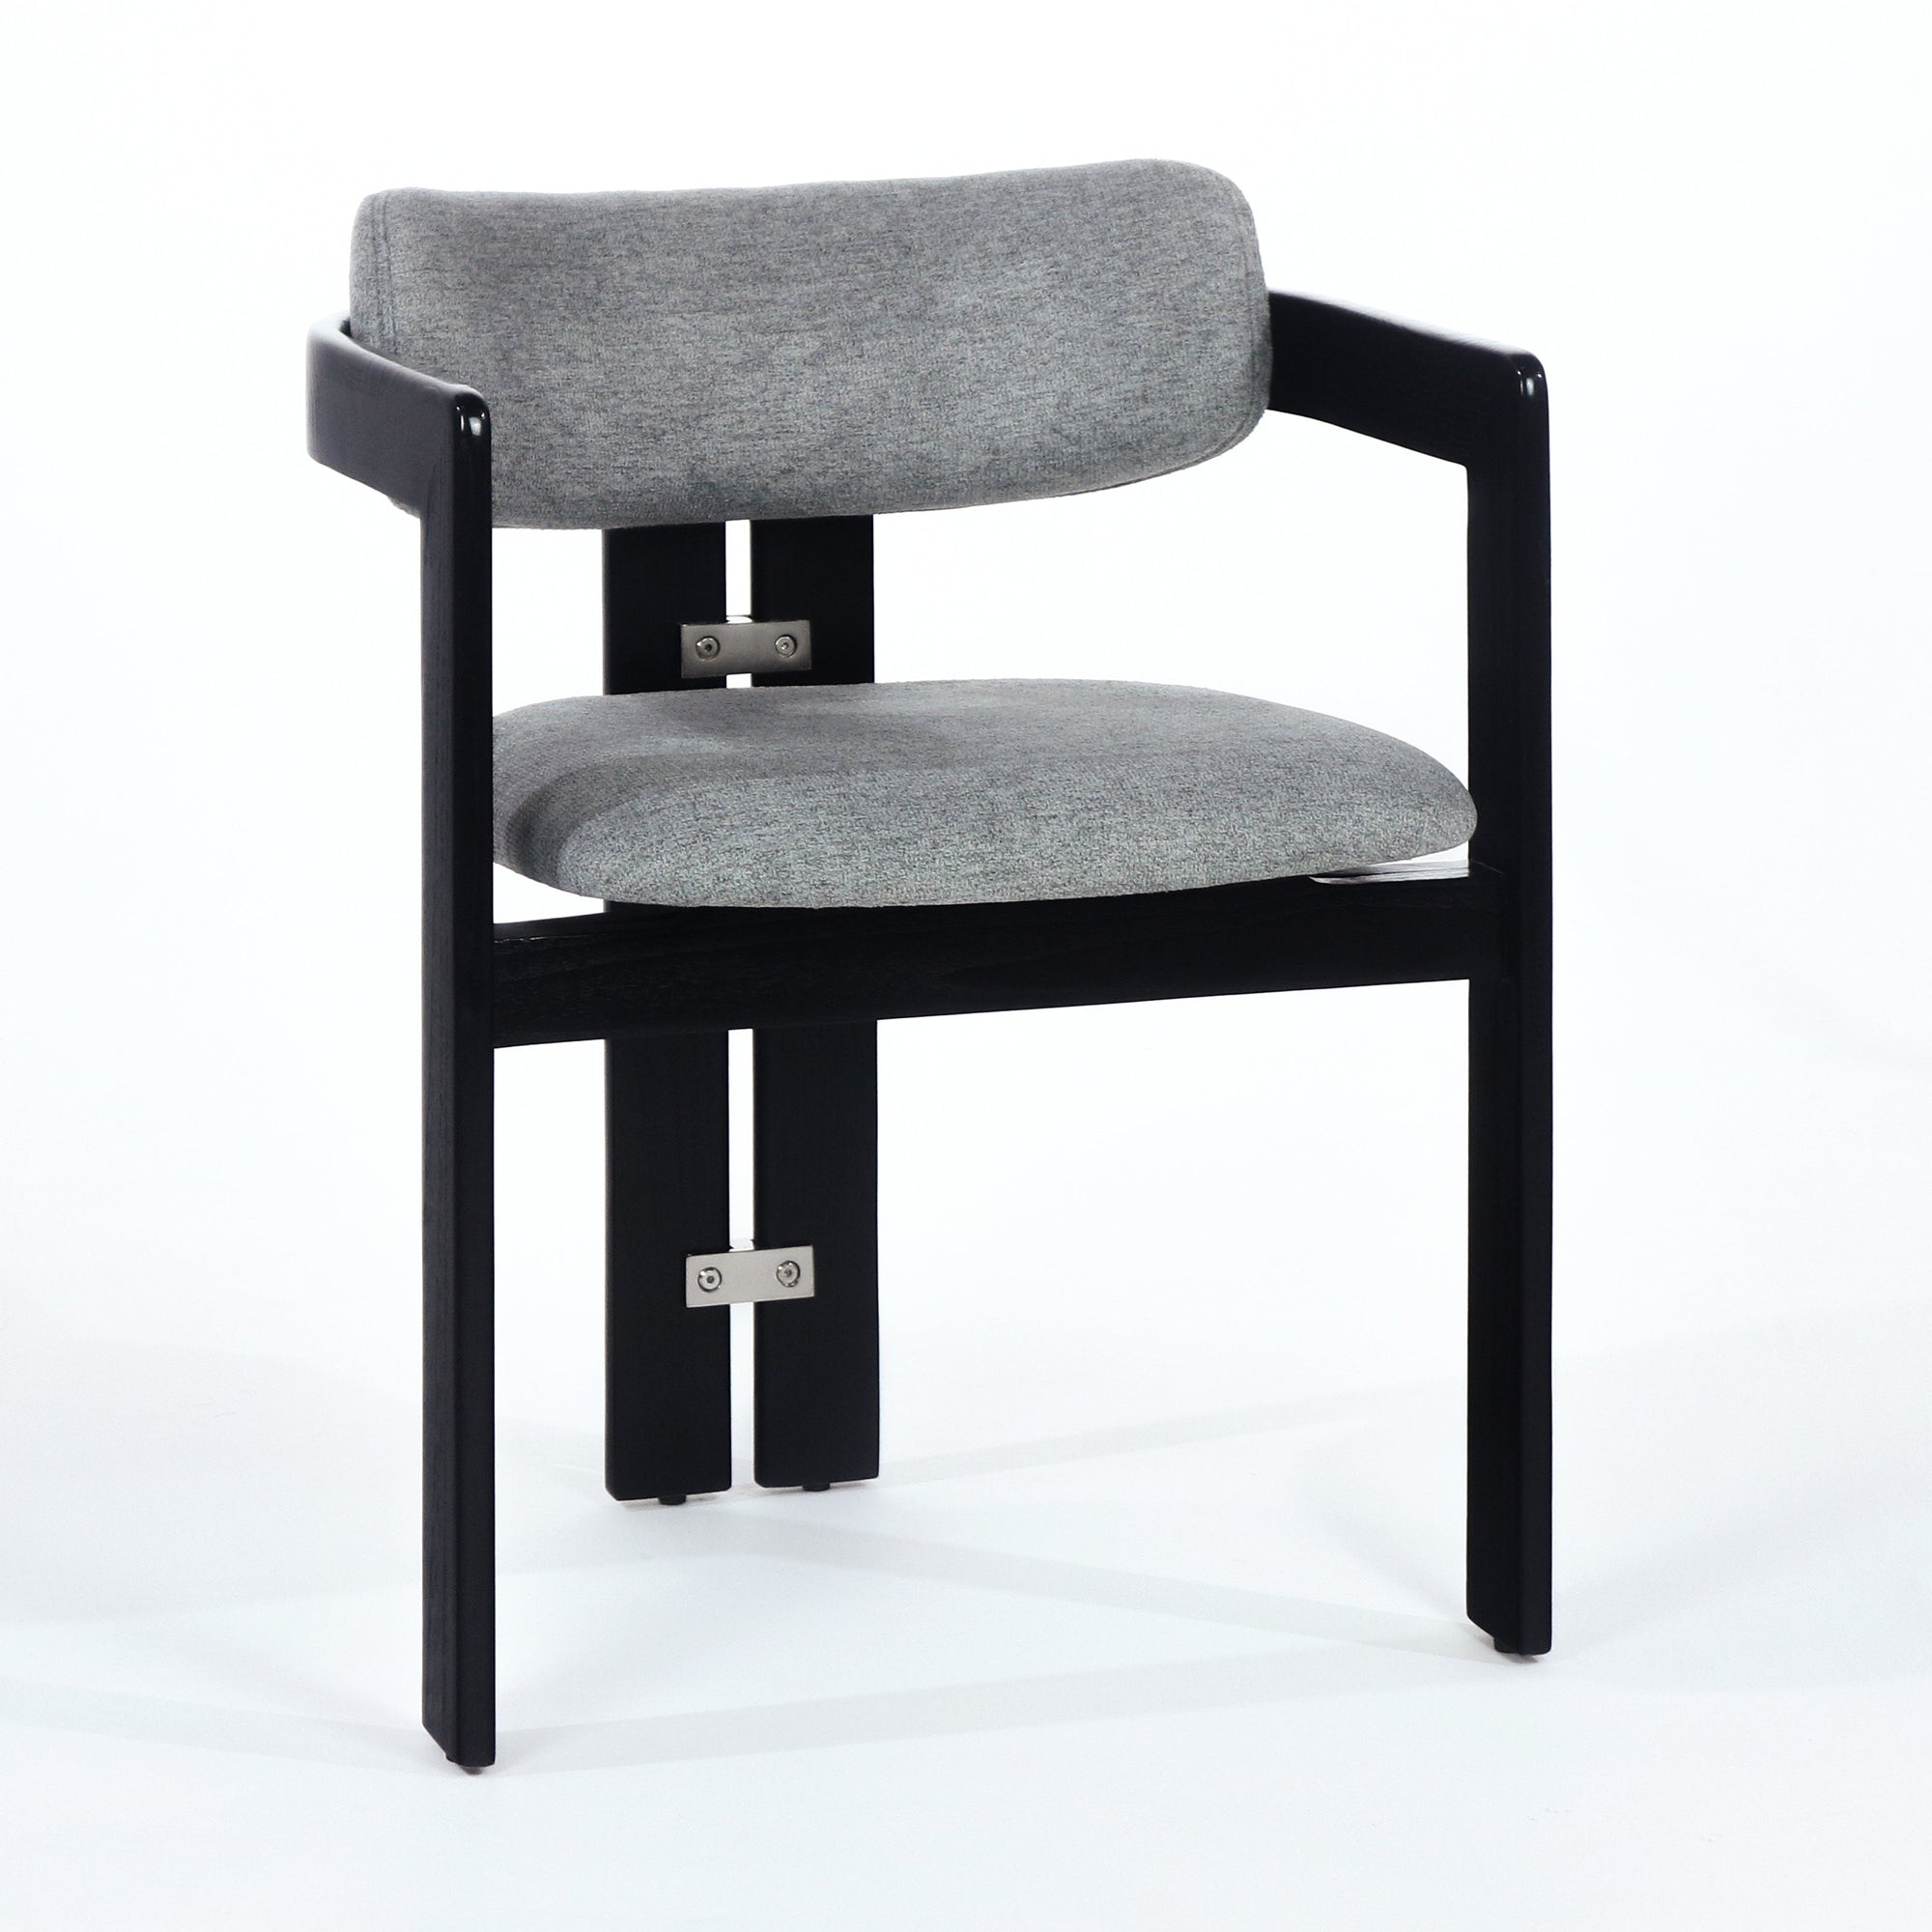 Pamplona Black, Stainless & Grey Boucle Dining Chair - INTERIORTONIC